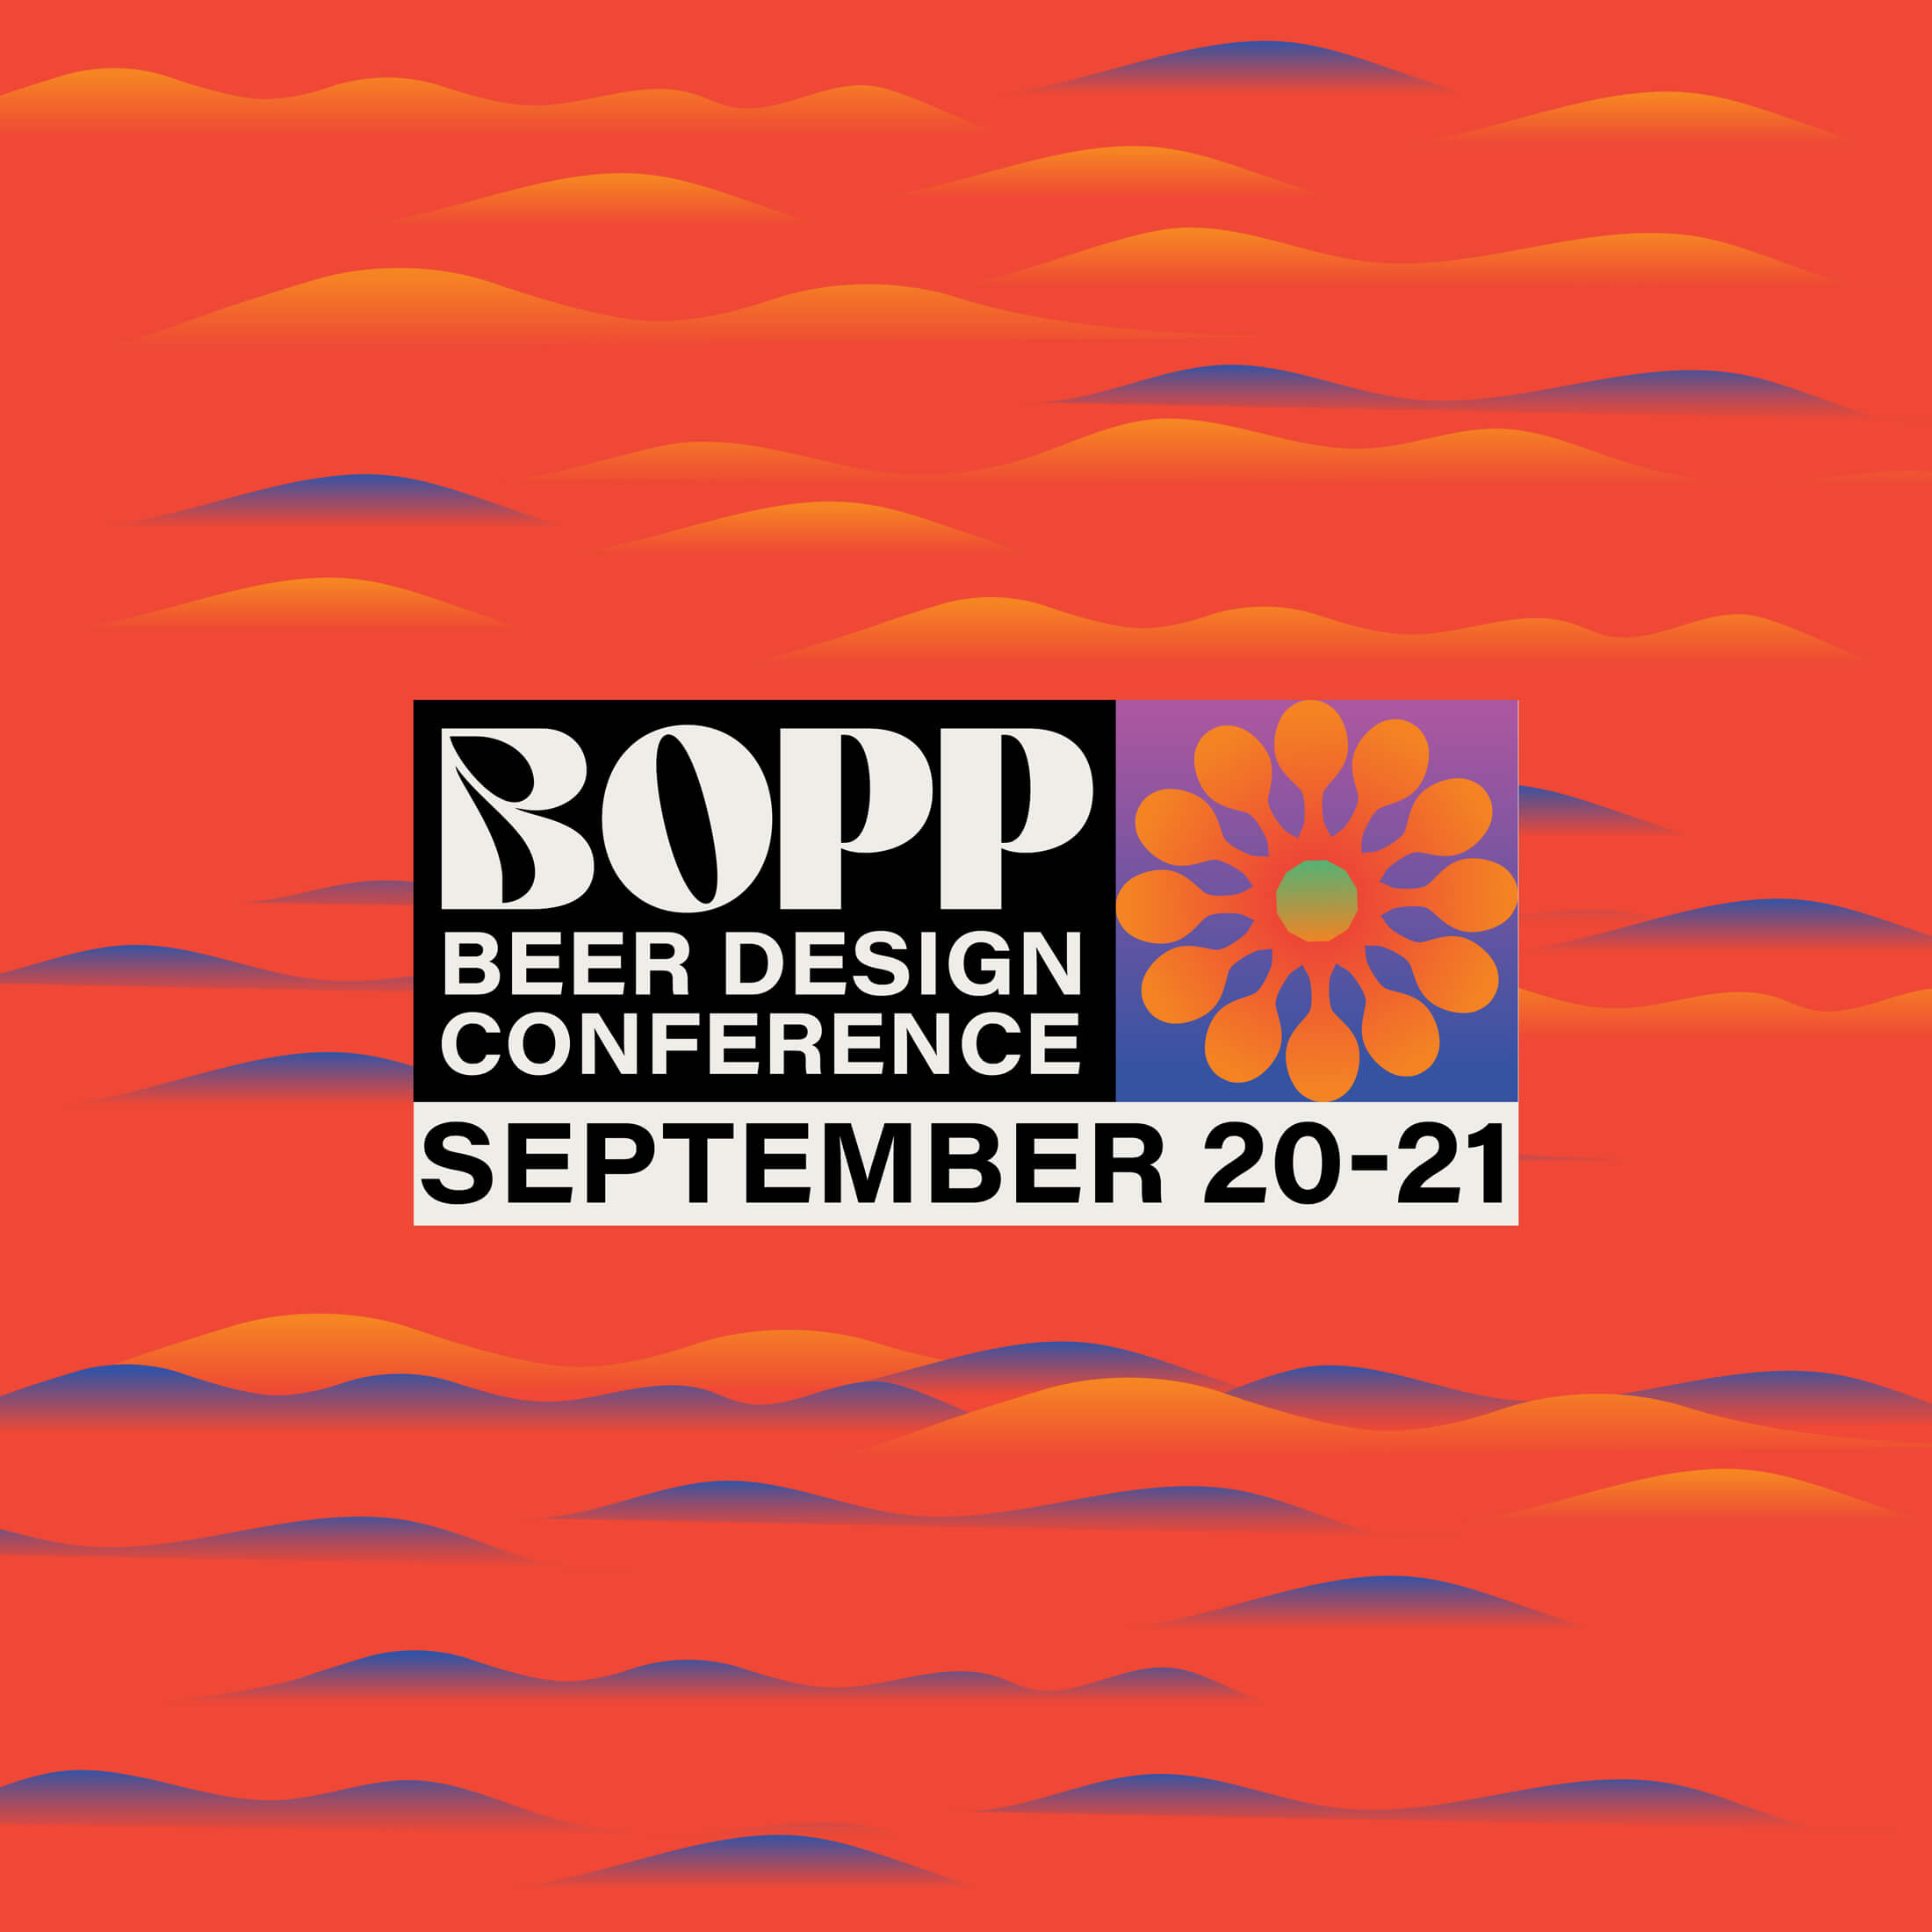 Bopp Beer Design Conference